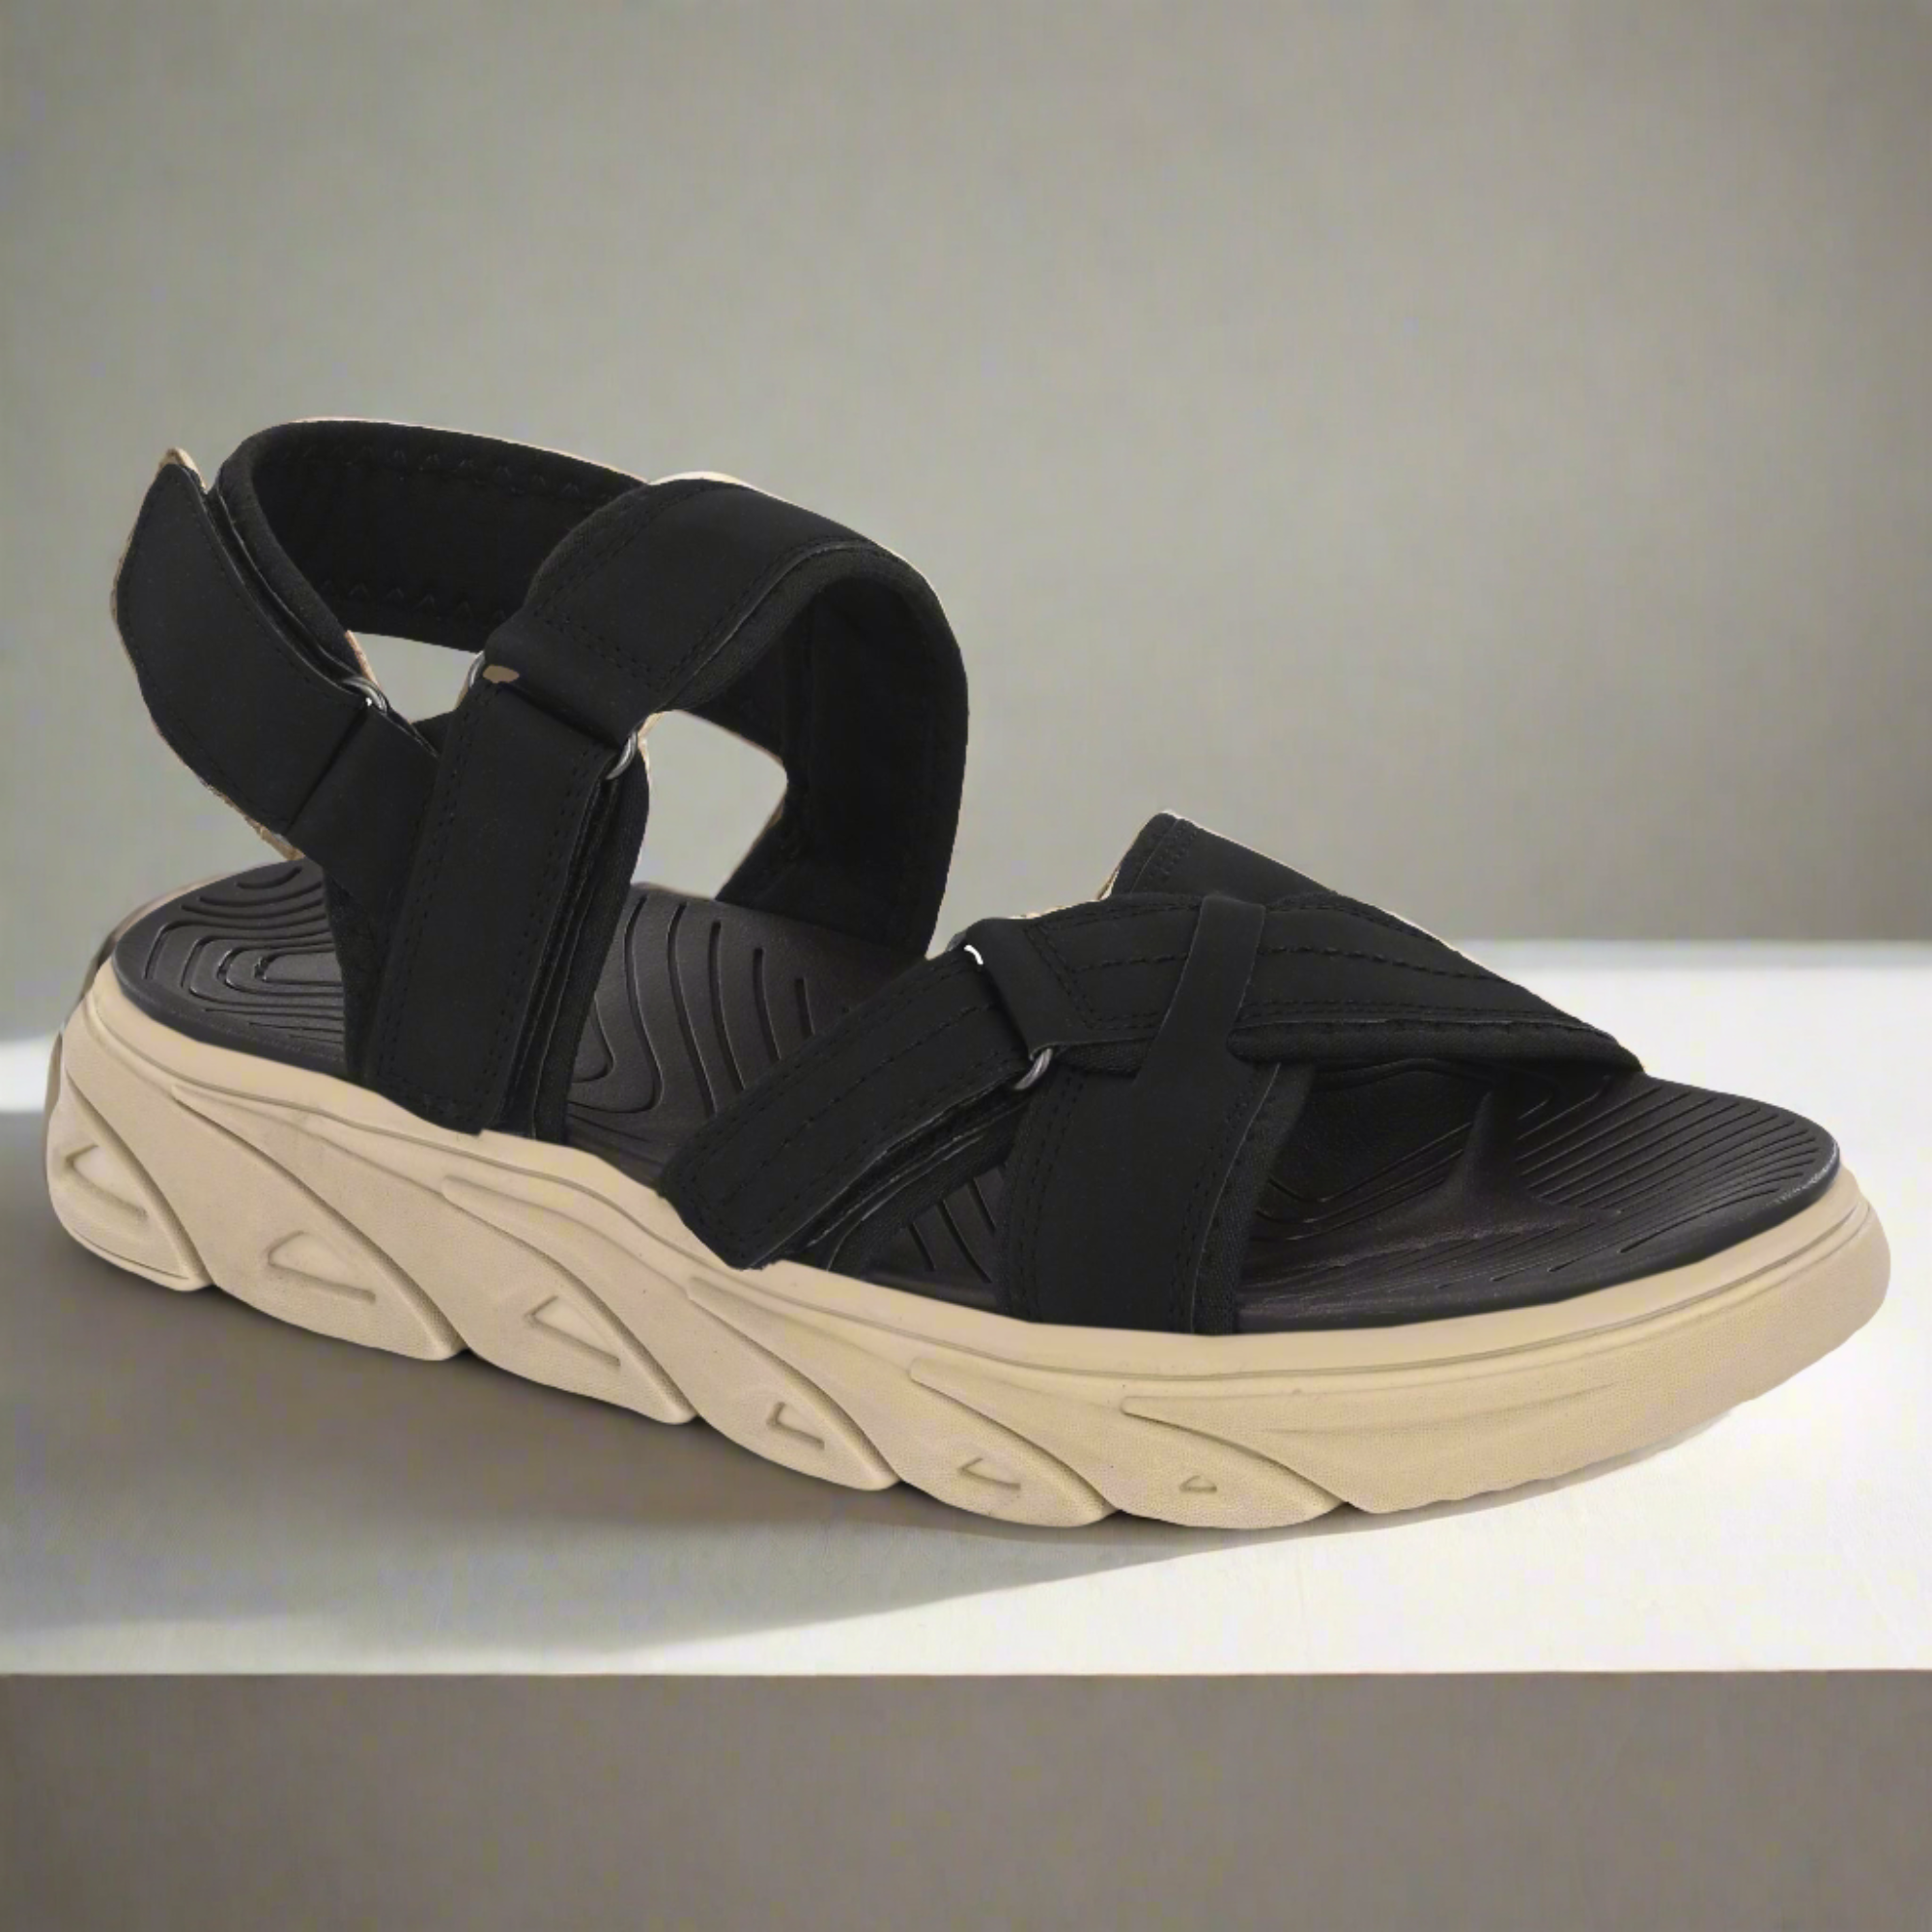 Attitudist Unisex Handcrafted Black Sports Sandal